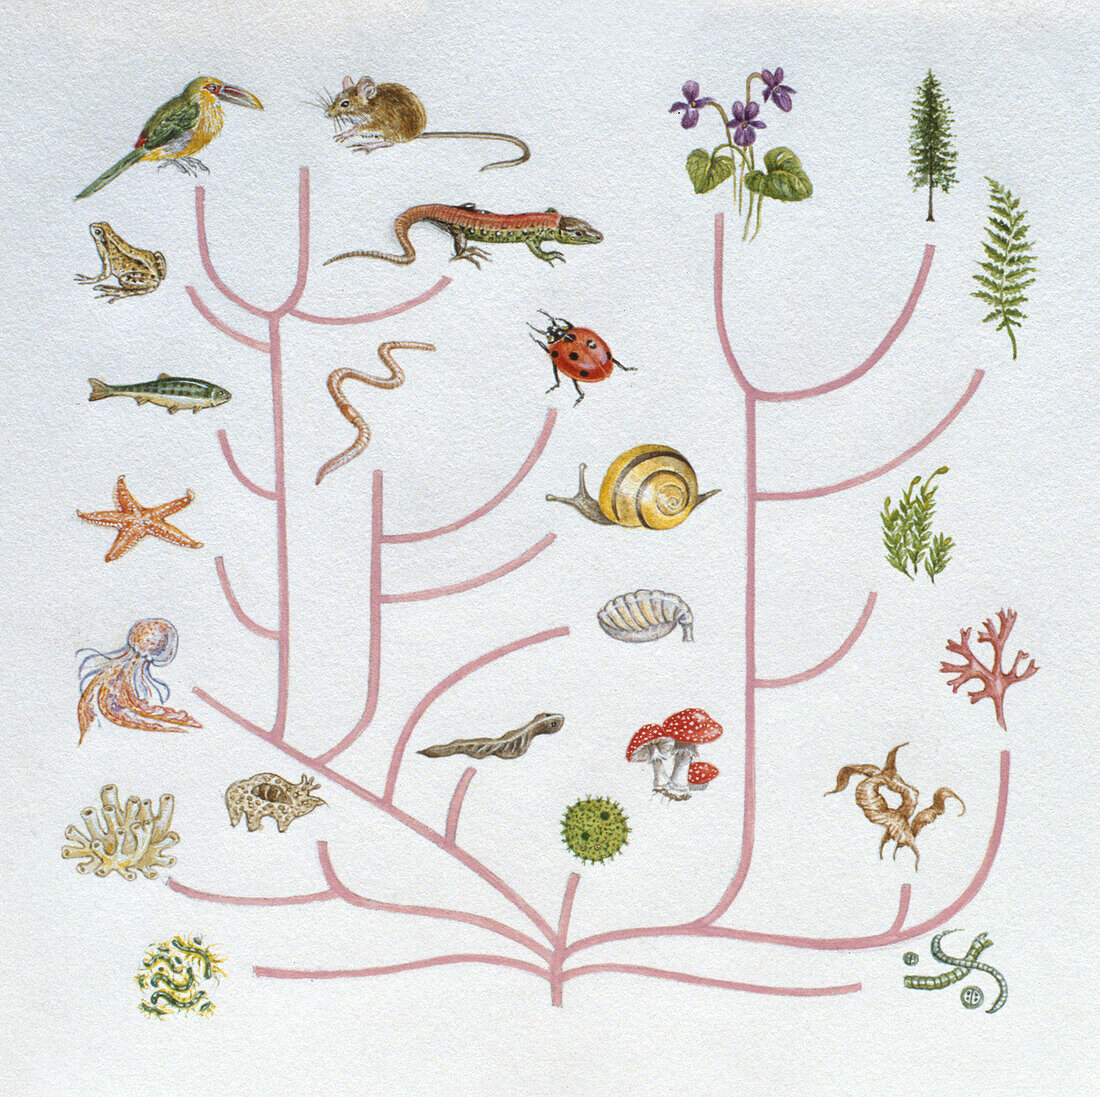 Evolutionary family tree, illustration